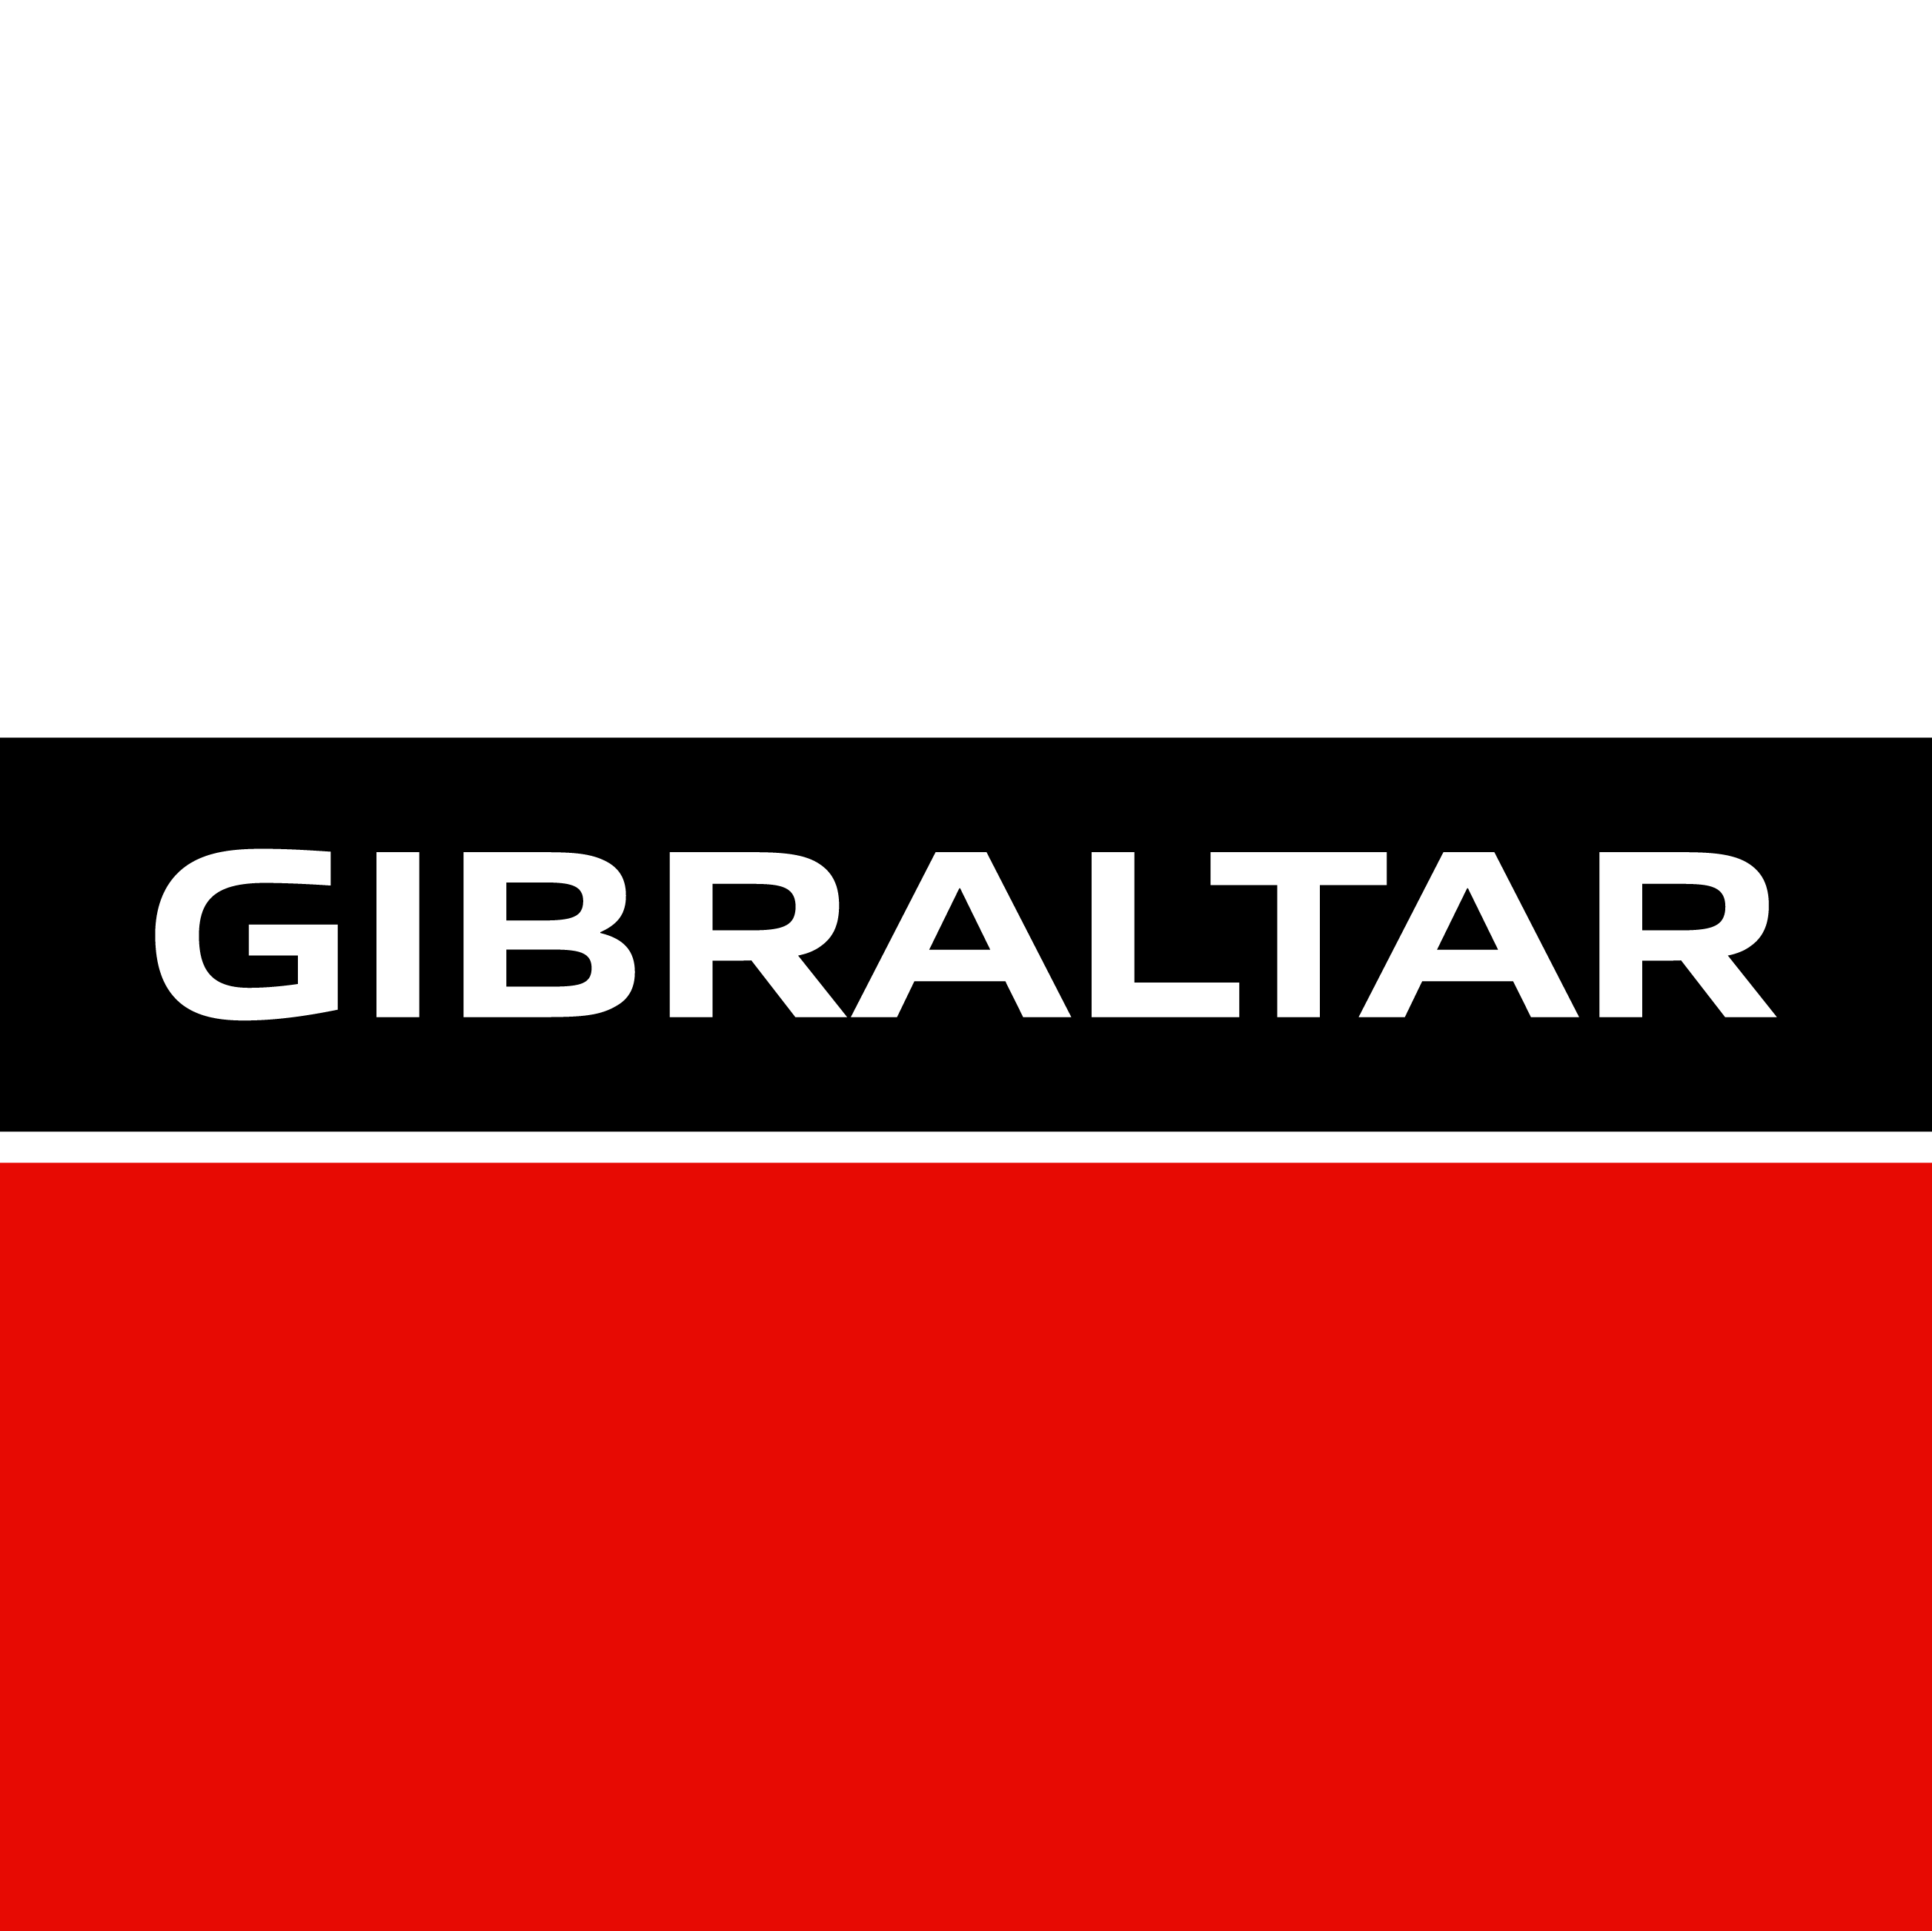 Club Image for GIBRALTAR